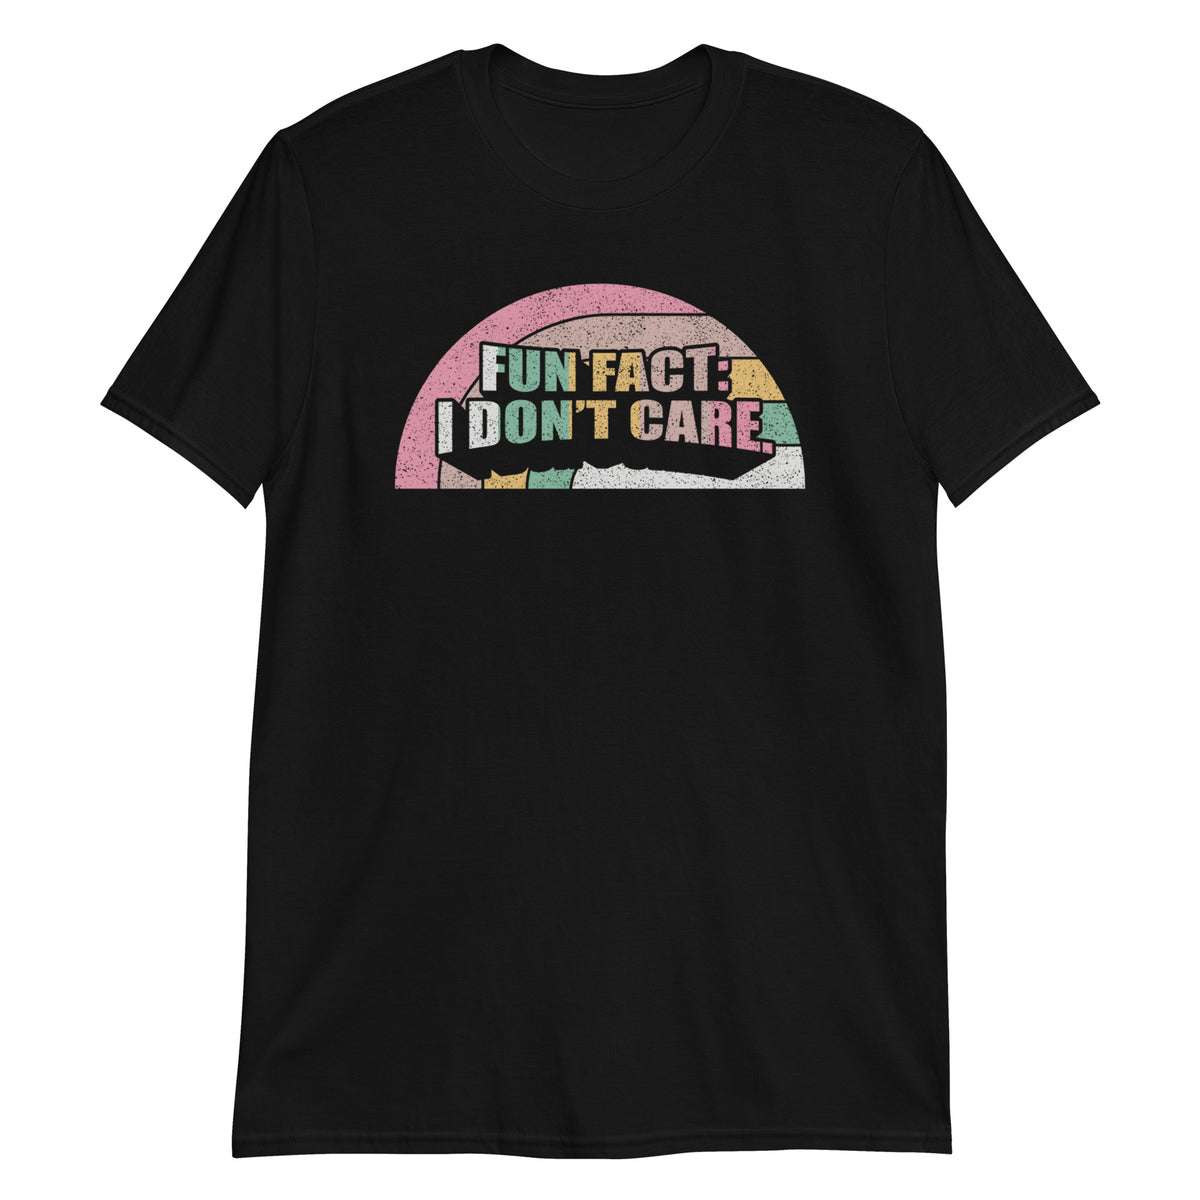 Fun Fact: I Don't Care Women Men Funny Saying Sarcastic T-Shirt